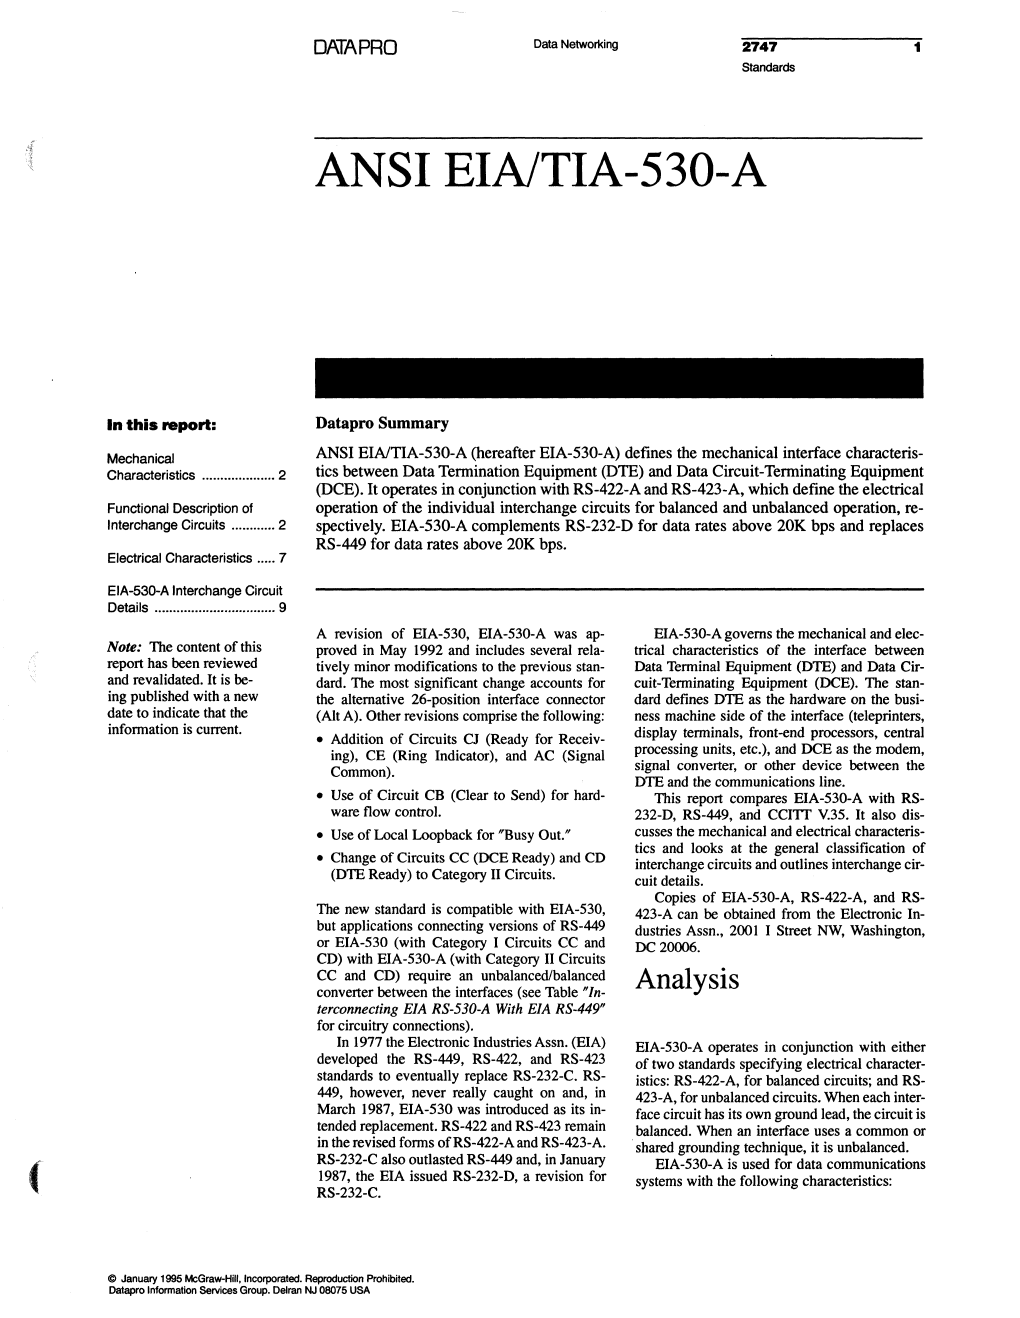 Ansi Eiaitia-530-A